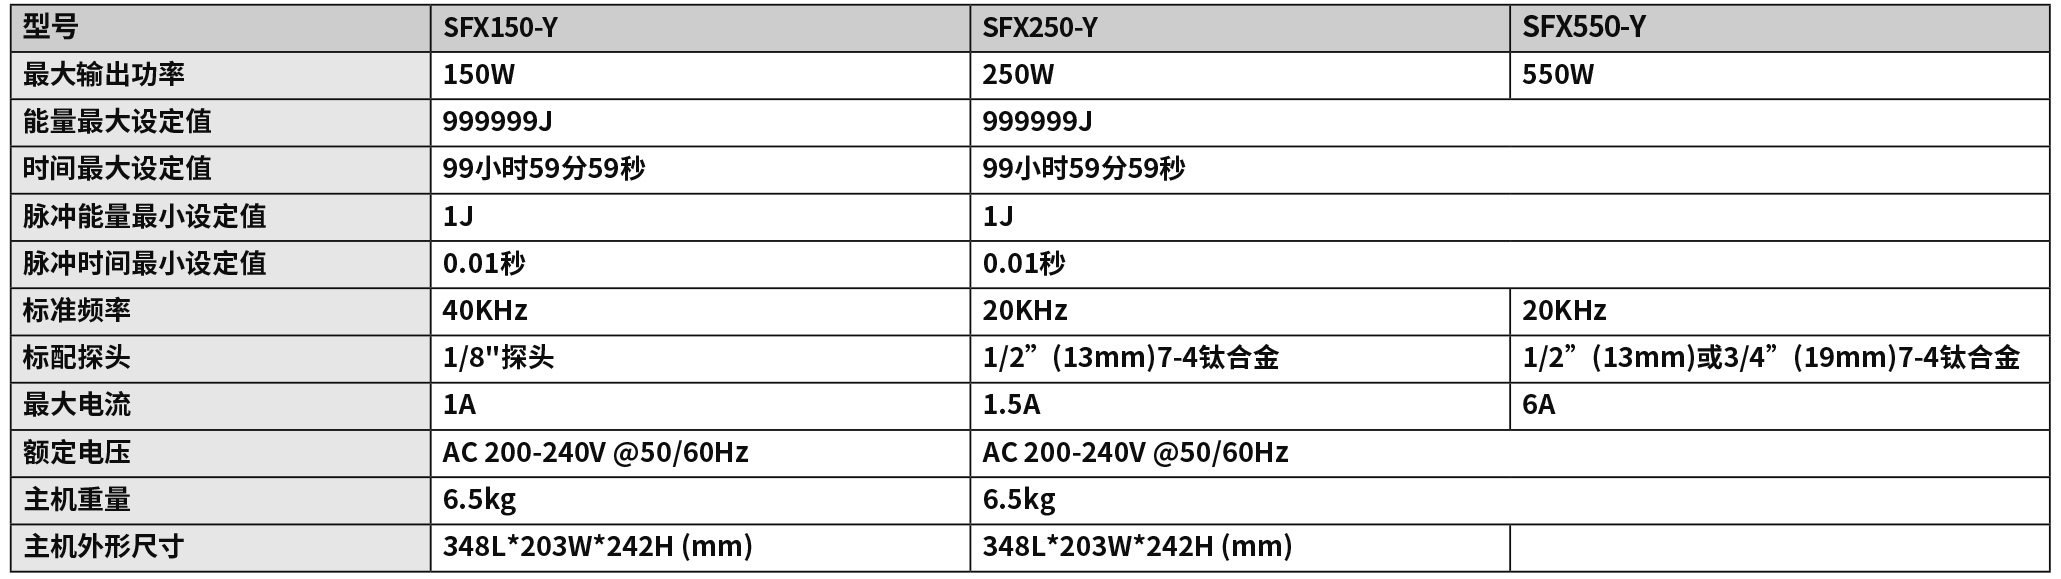 2020-2021_P224-225 SFX（new）-1.jpg